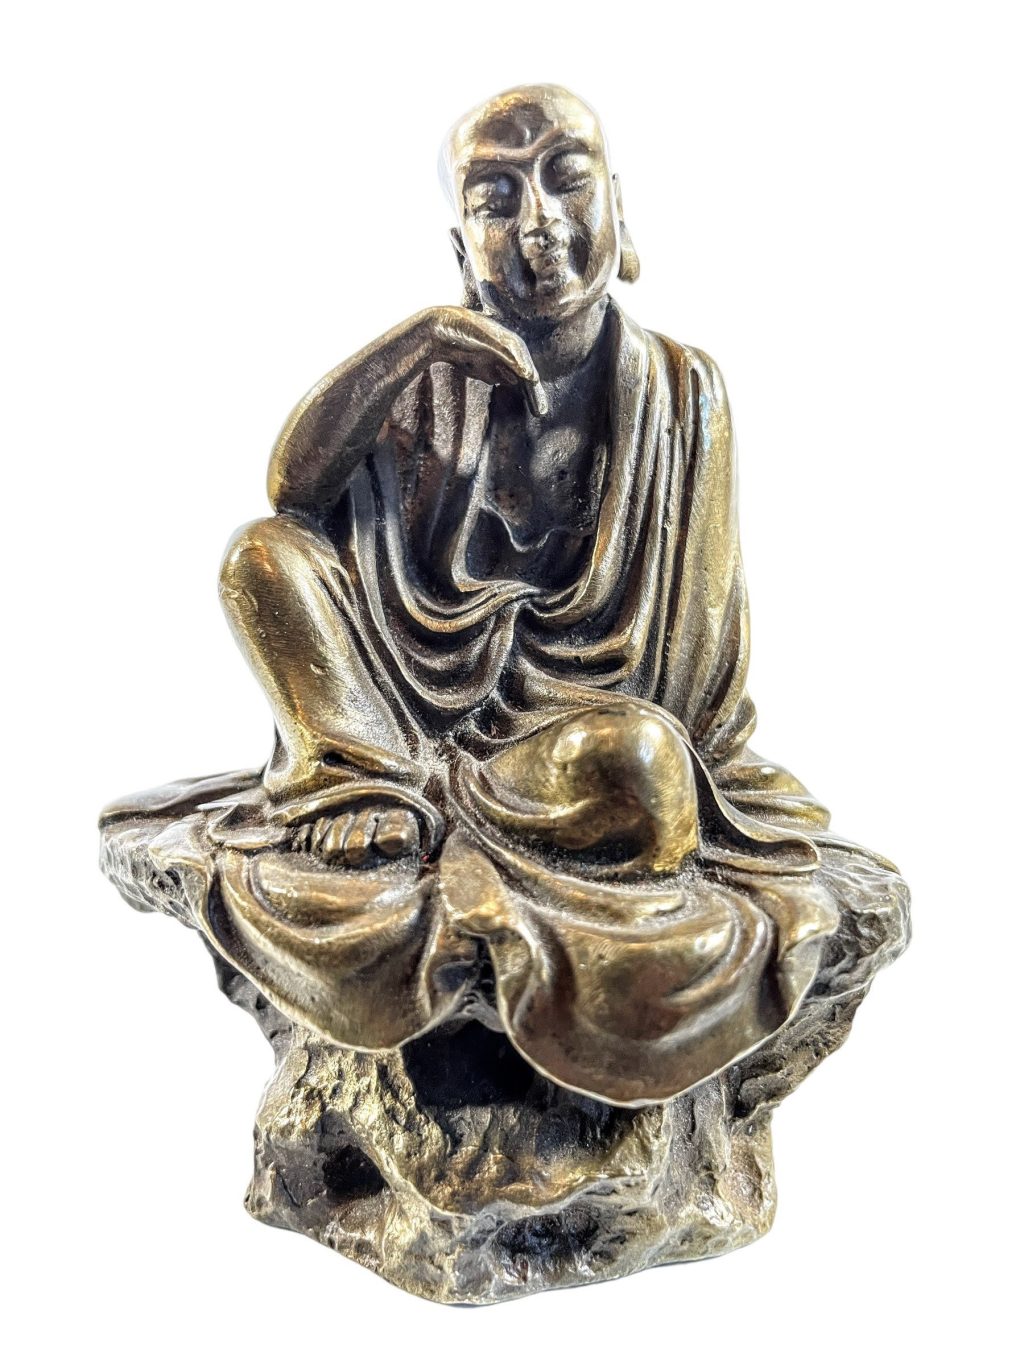 Antique Japanese Solid Bronze Okimono Altar Figurine Buddhist Monk 19th Century Figurine Ornament circa 1850-1900’s